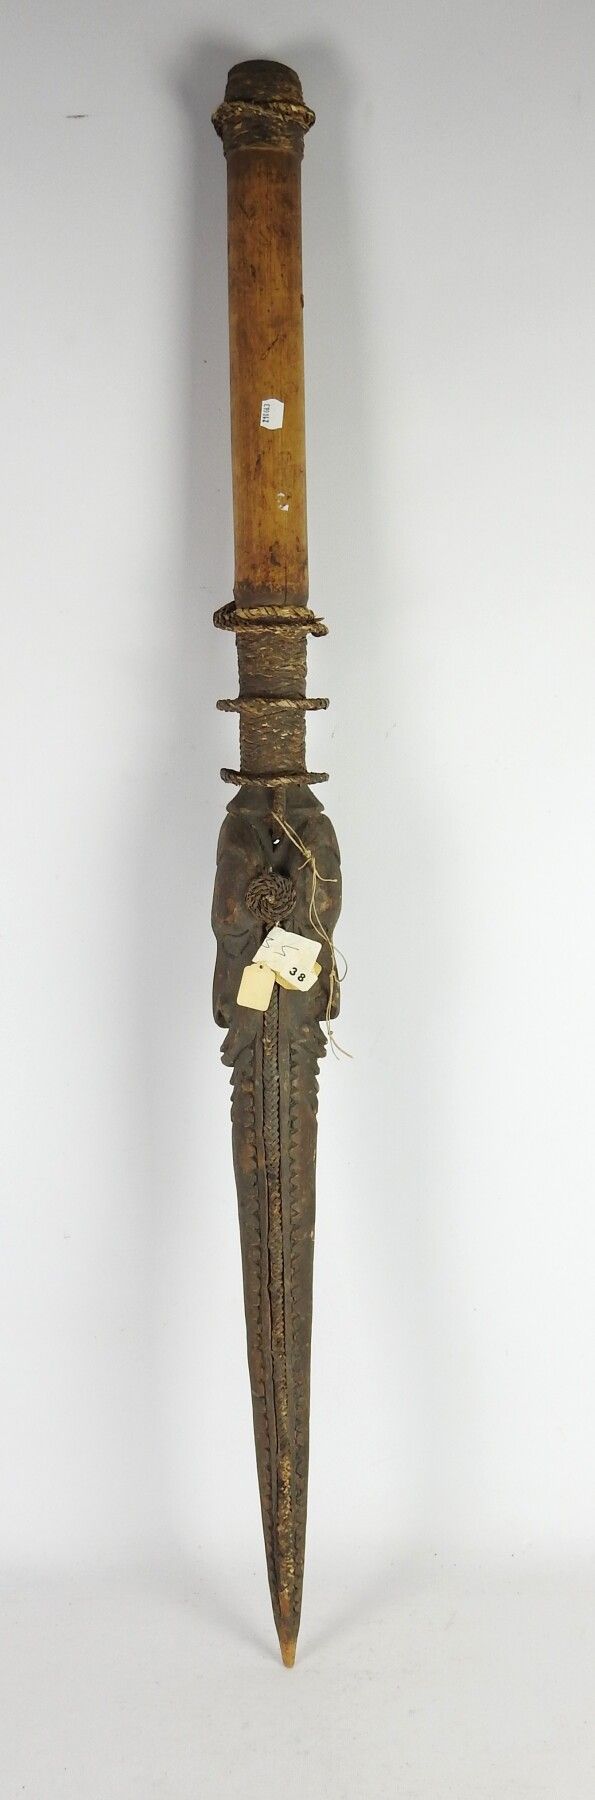 Null IATMUL: Flöte aus Holz und Bambus mit Korbgeflecht. Länge:122 cm.